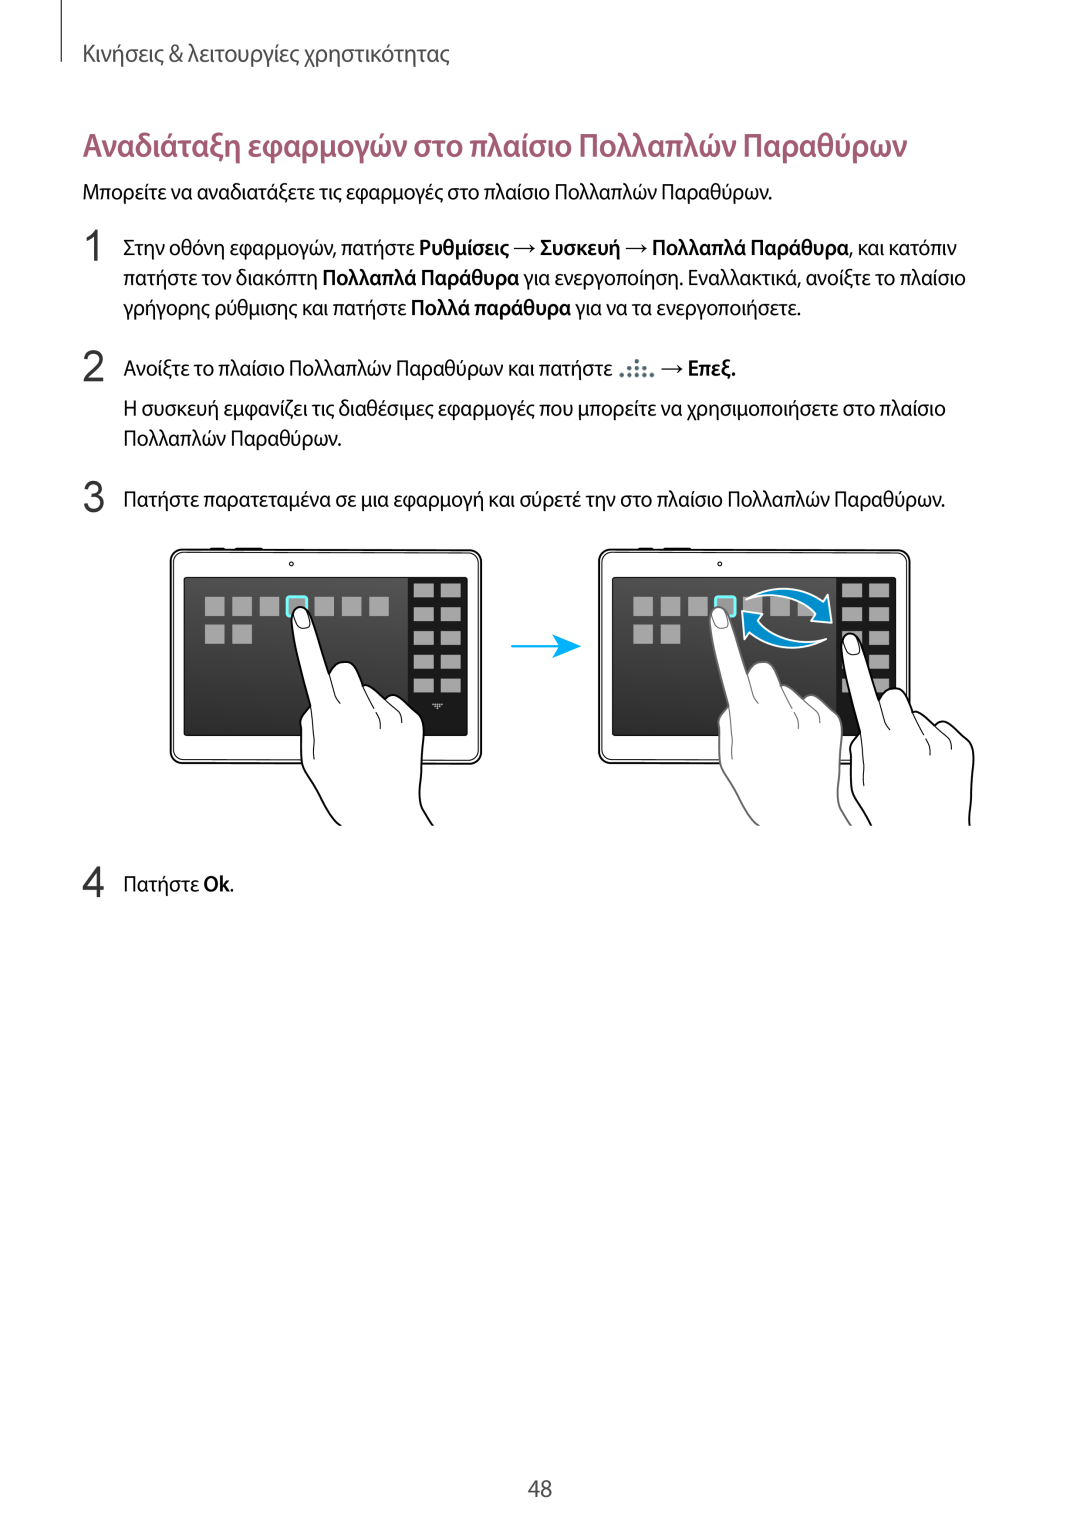 Samsung SM-T805NTSAEUR manual Αναδιάταξη εφαρμογών στο πλαίσιο Πολλαπλών Παραθύρων, Κινήσεις & λειτουργίες χρηστικότητας 